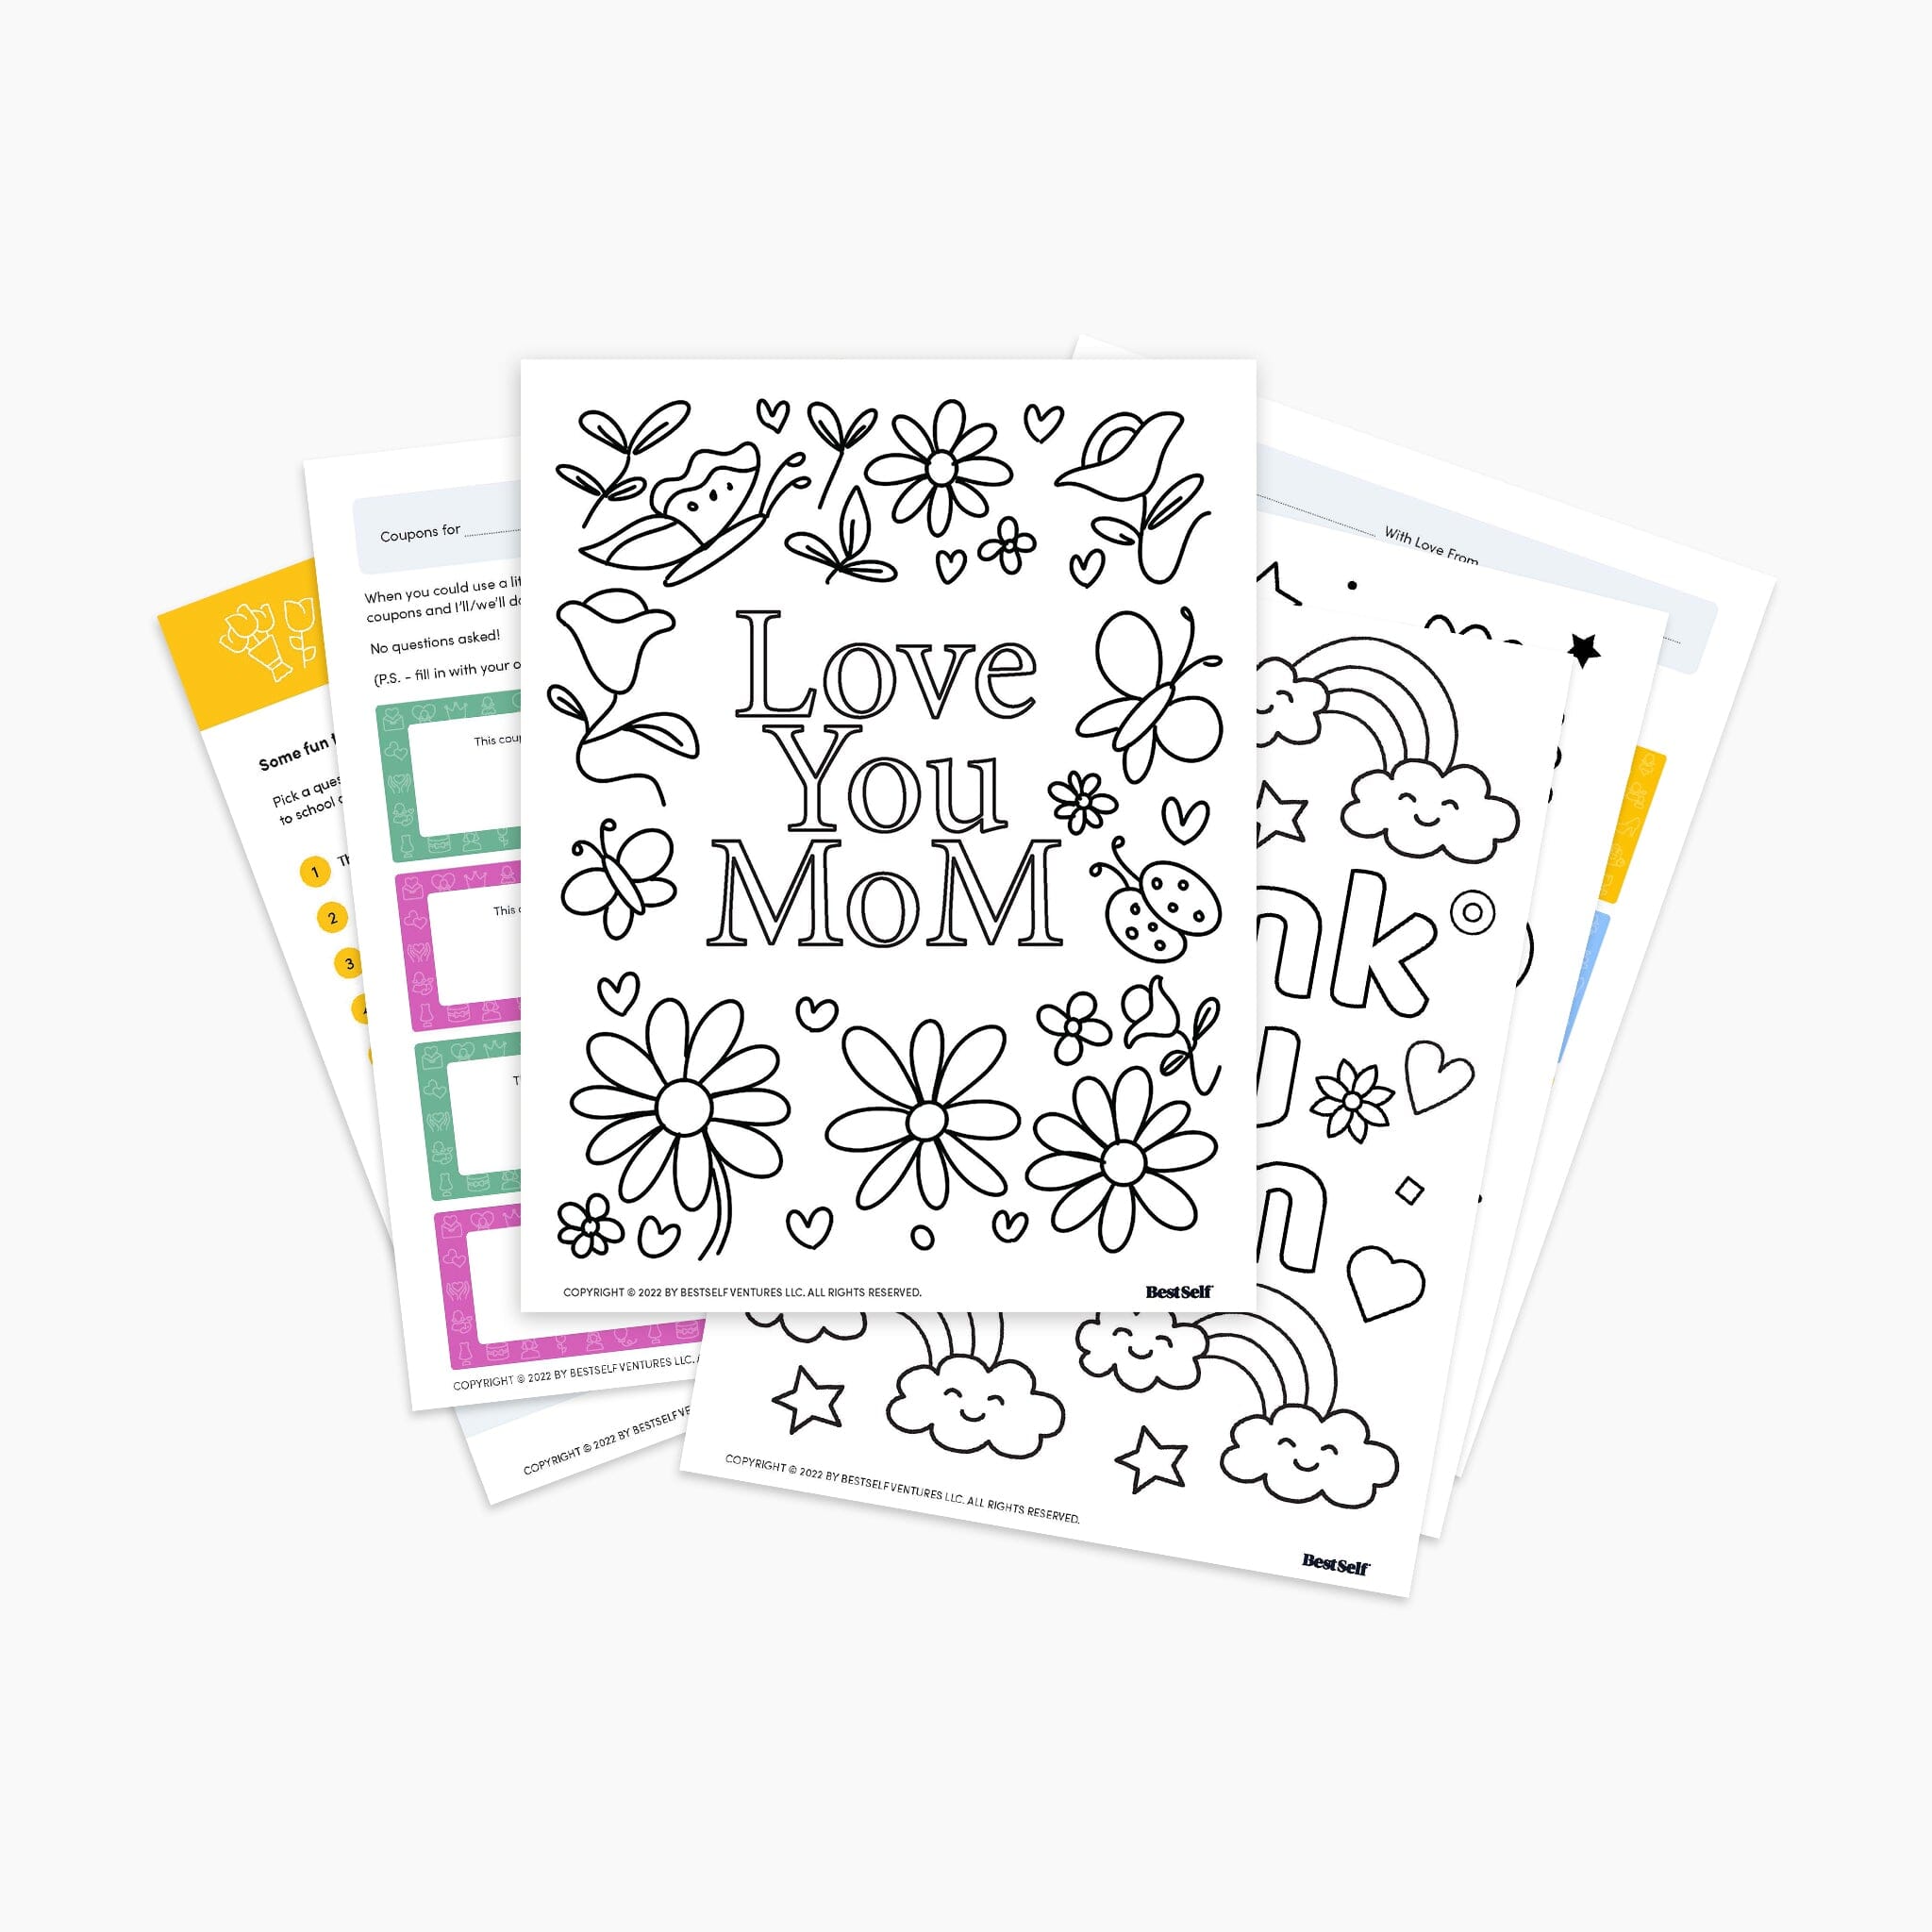 Mother’s Day Activity Workbook (Digital Download) Digital Download Kids + Family